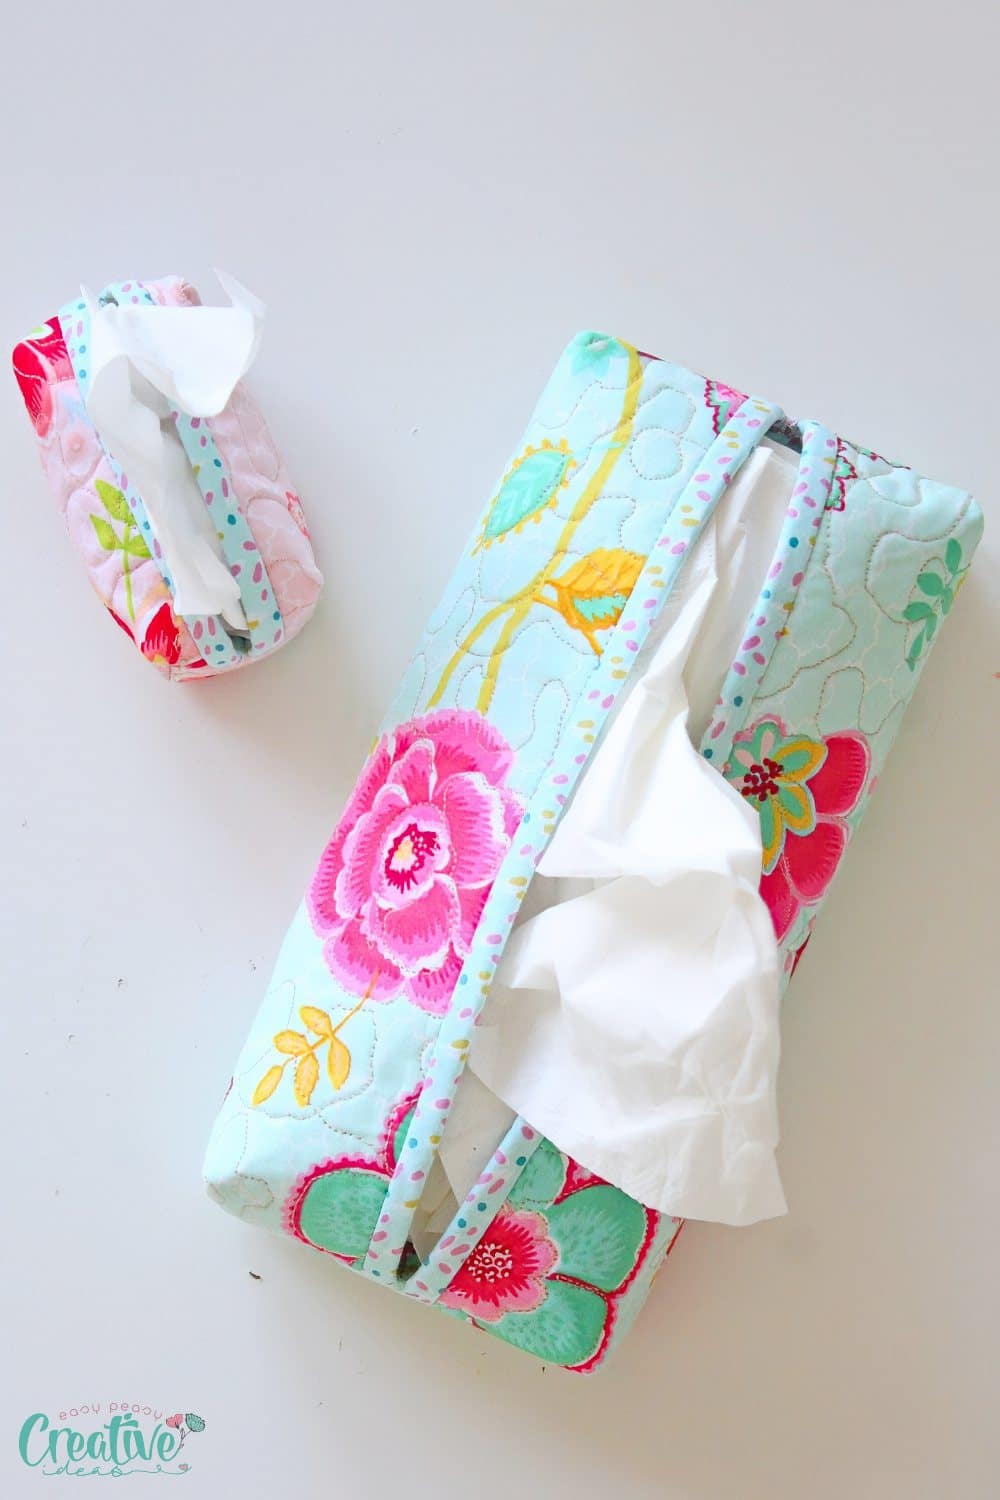 Two handmade fabric tissue holders